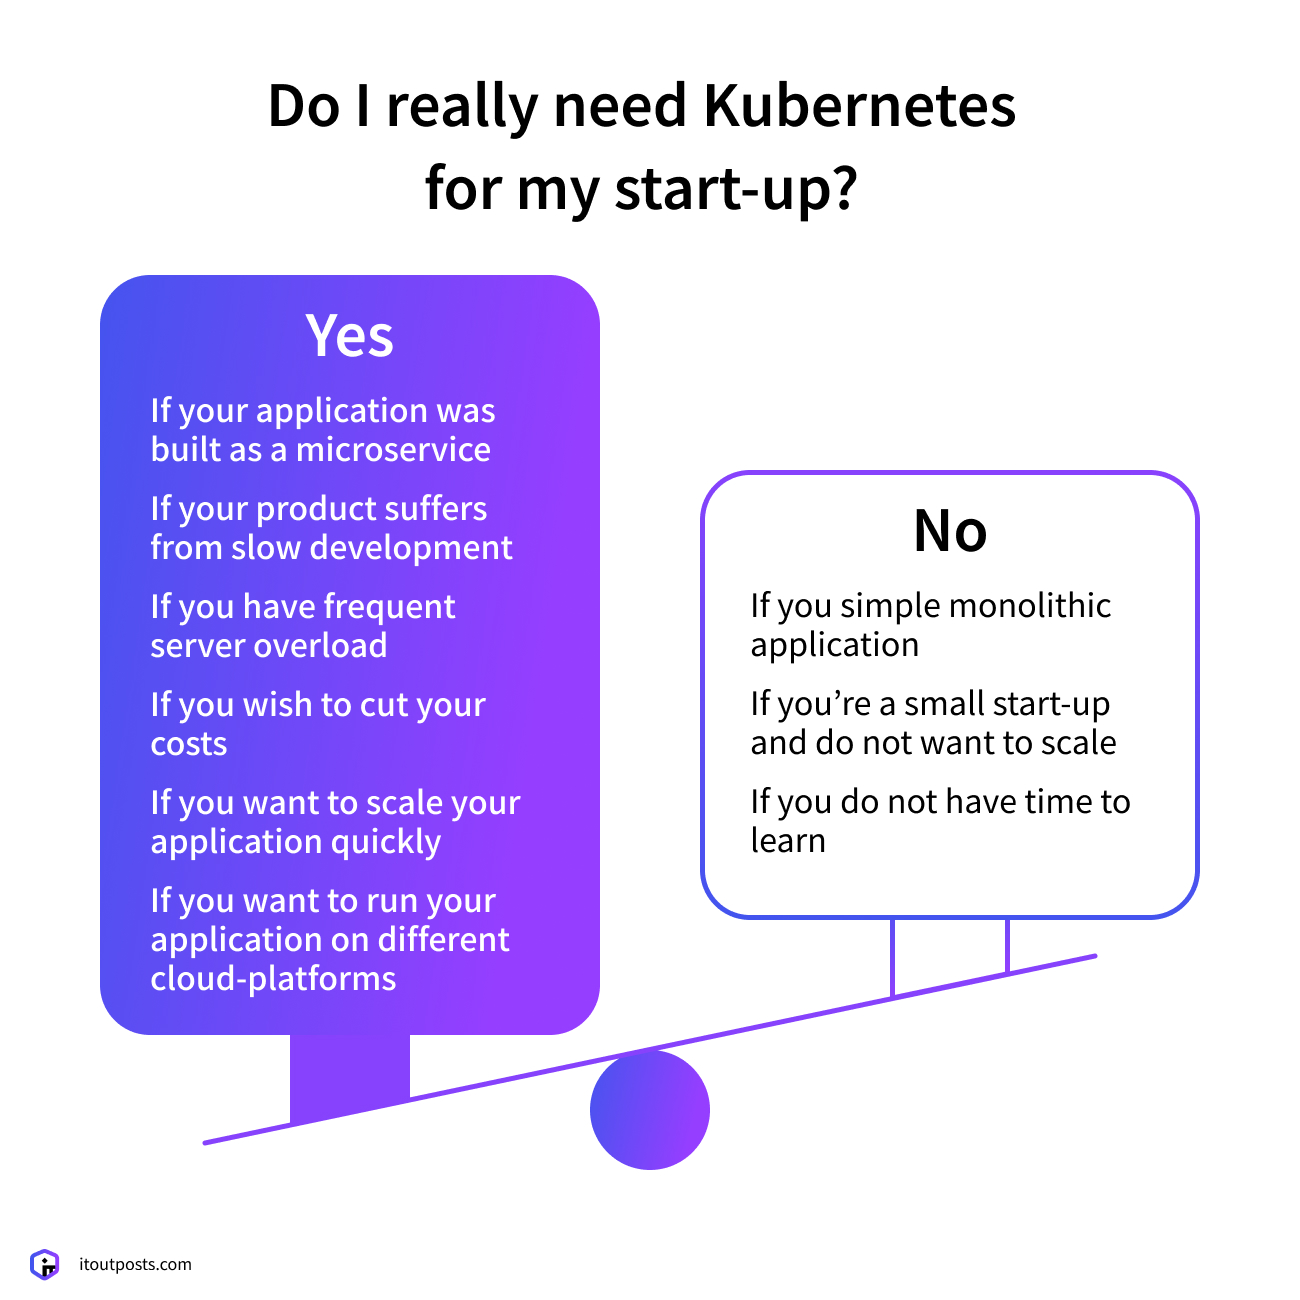 Do I Really Need Kubernetes for my Start-Up?